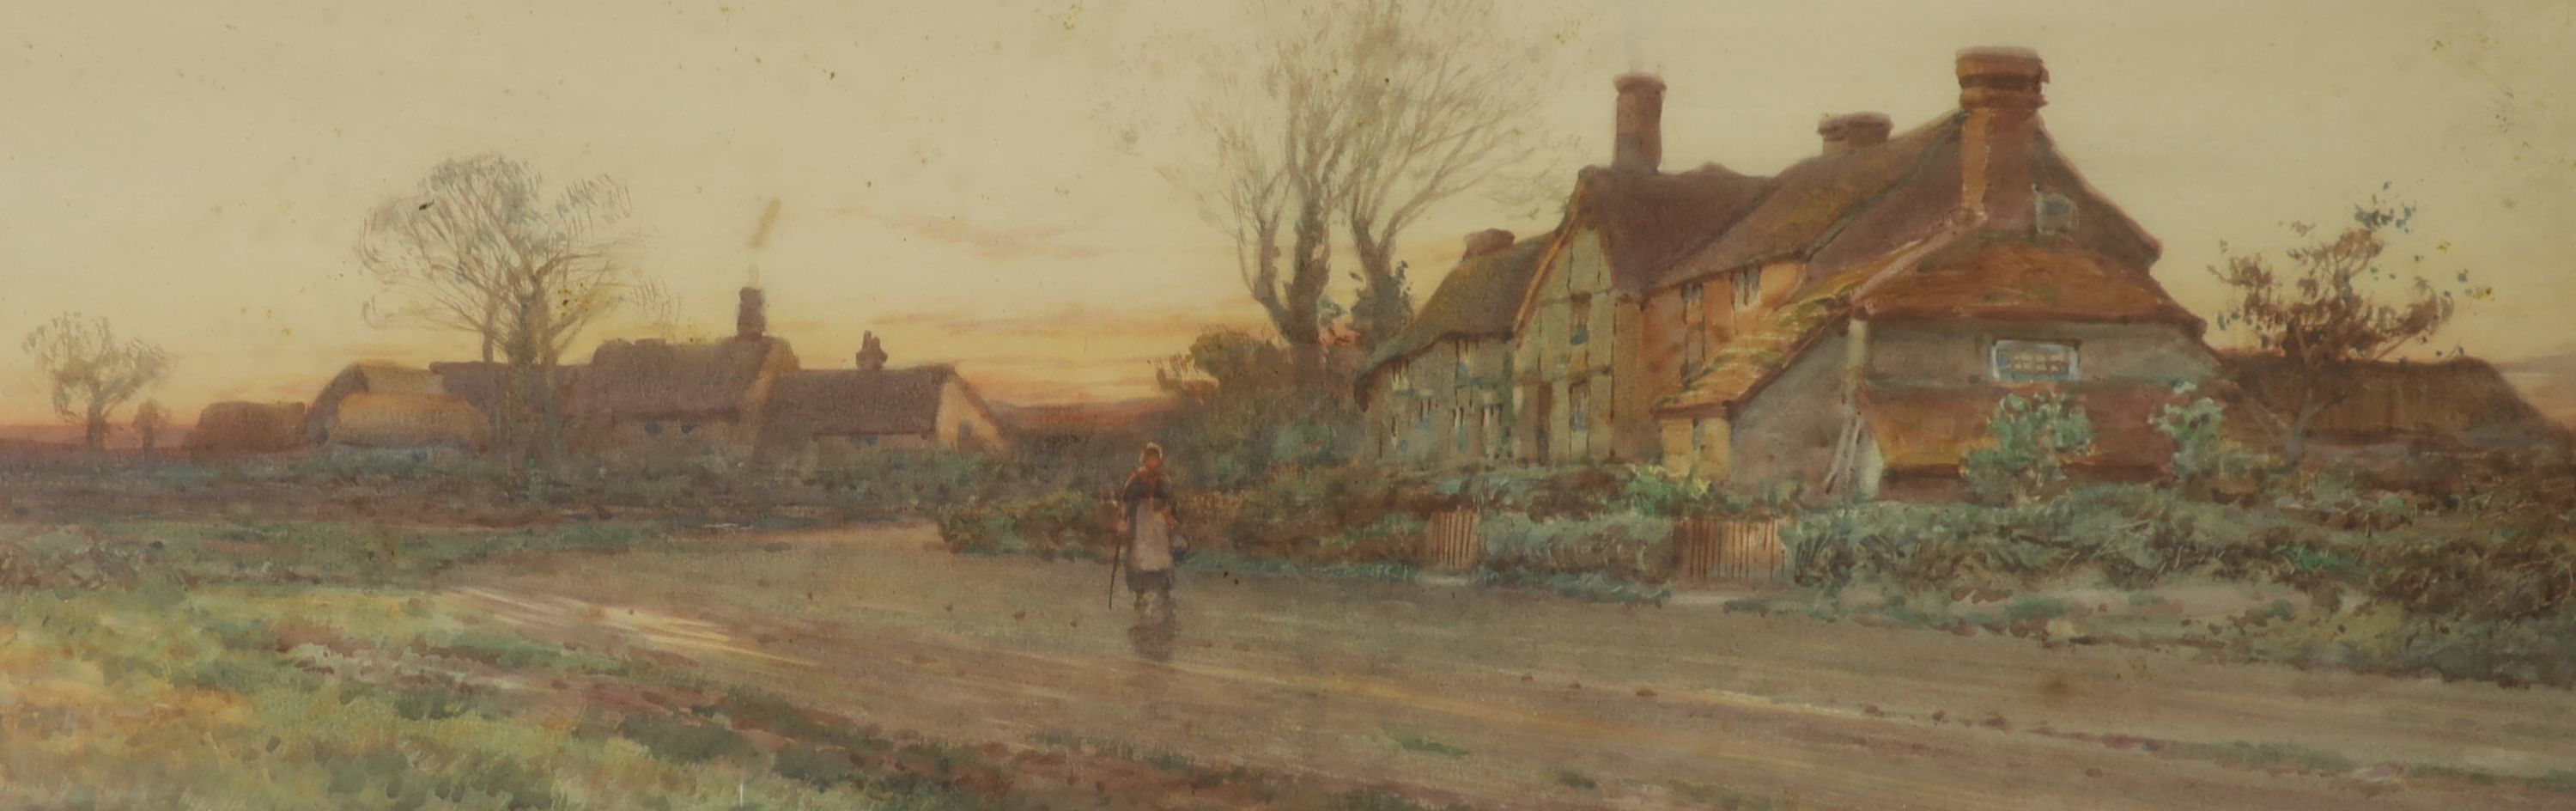 E. Cooper, set of four watercolours, A Sussex Village, Old Shoreham Bridge, September Evening, Ryde and A Sussex Village Evening, signed and dated 1909, 90 x 54cm